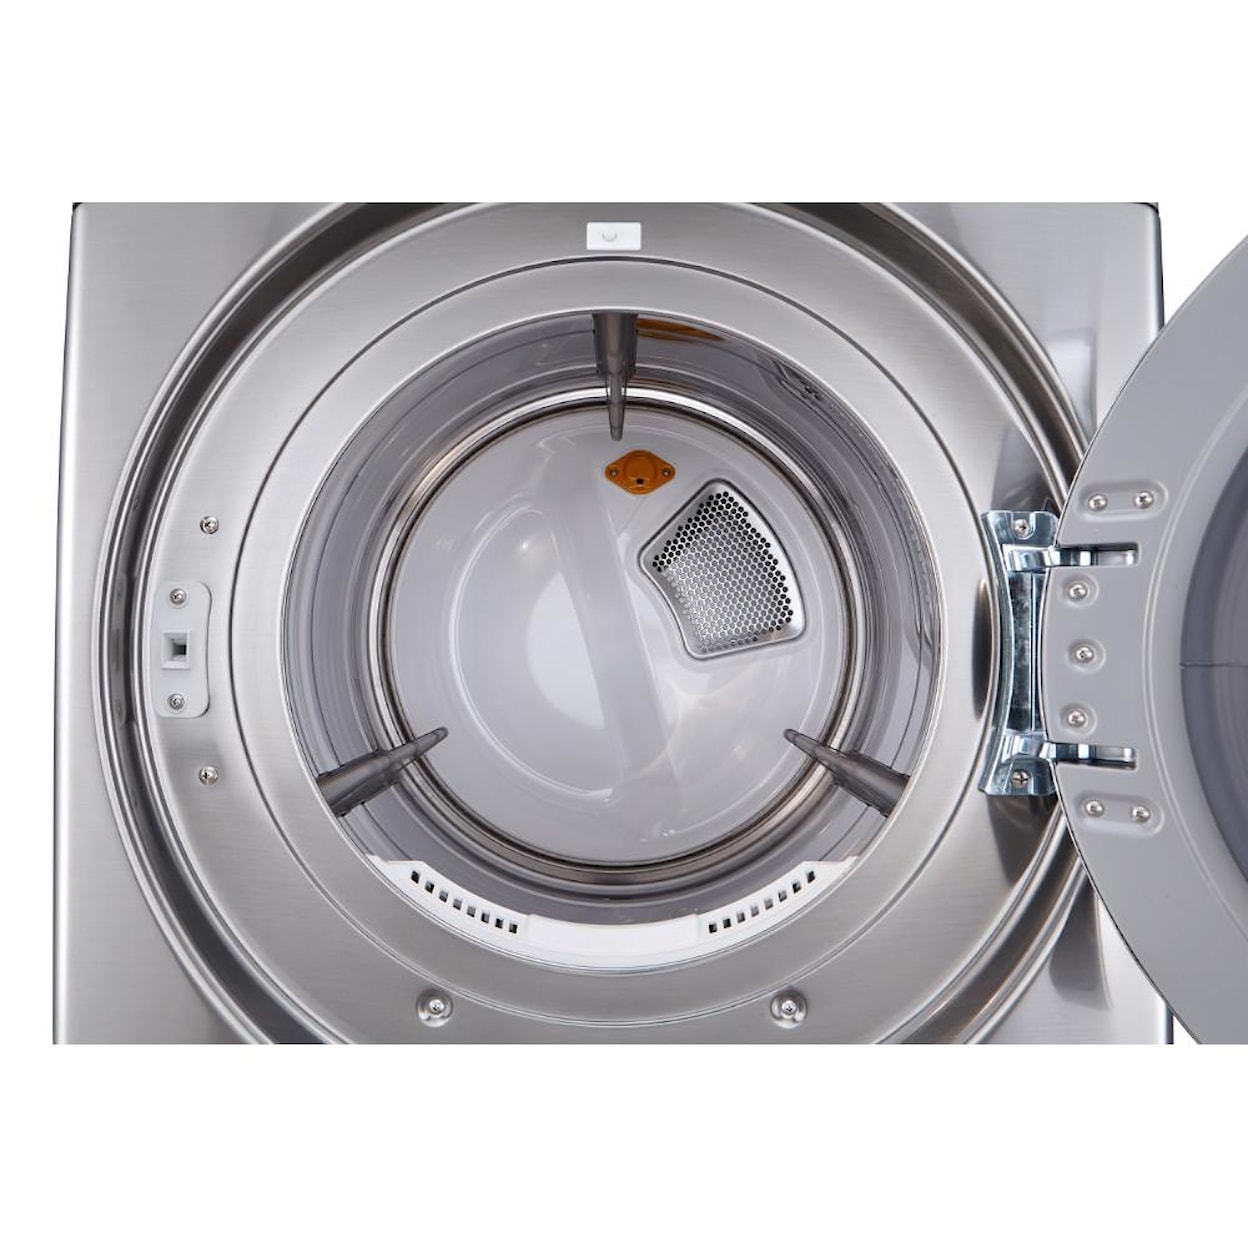 LG Appliances Dryers 7.4 Cu. Ft. Front-Load Electric Dryer